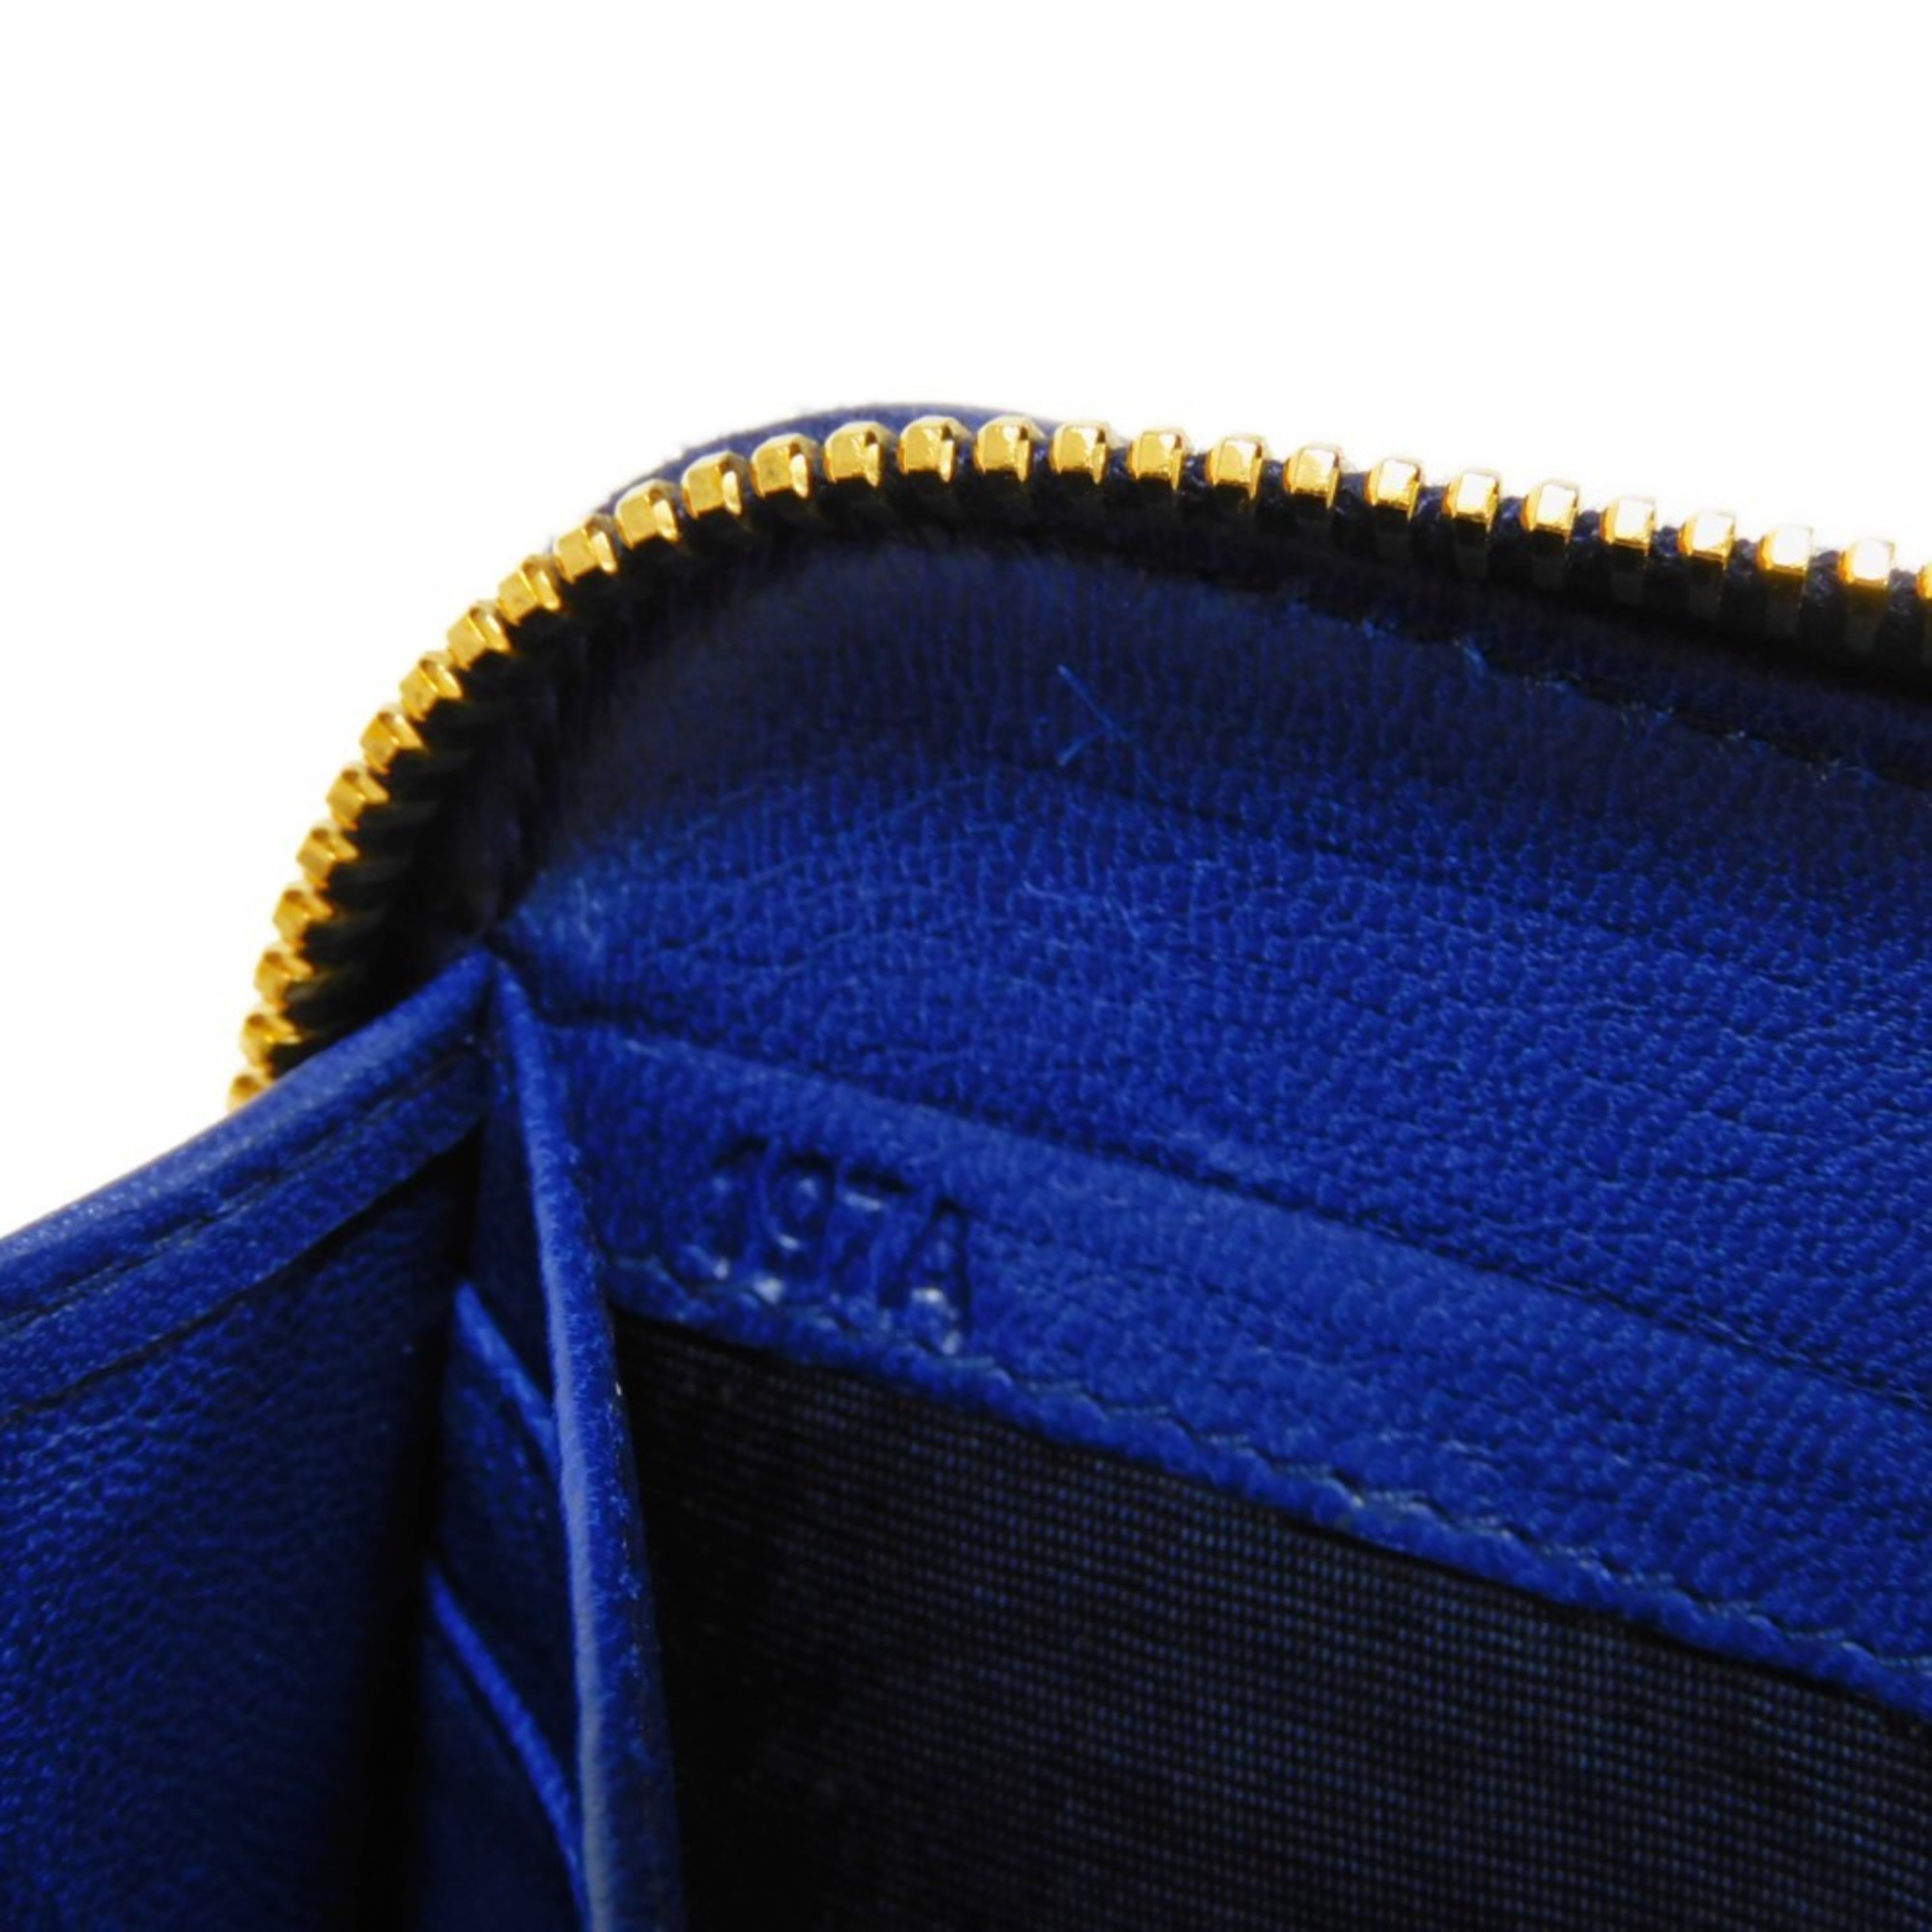 Miu MIUMIU Long Wallet Matelasse Patch Zip Around Nappa Gathered Blue Inkiostro 5M0506 2E6N F0021 Women's